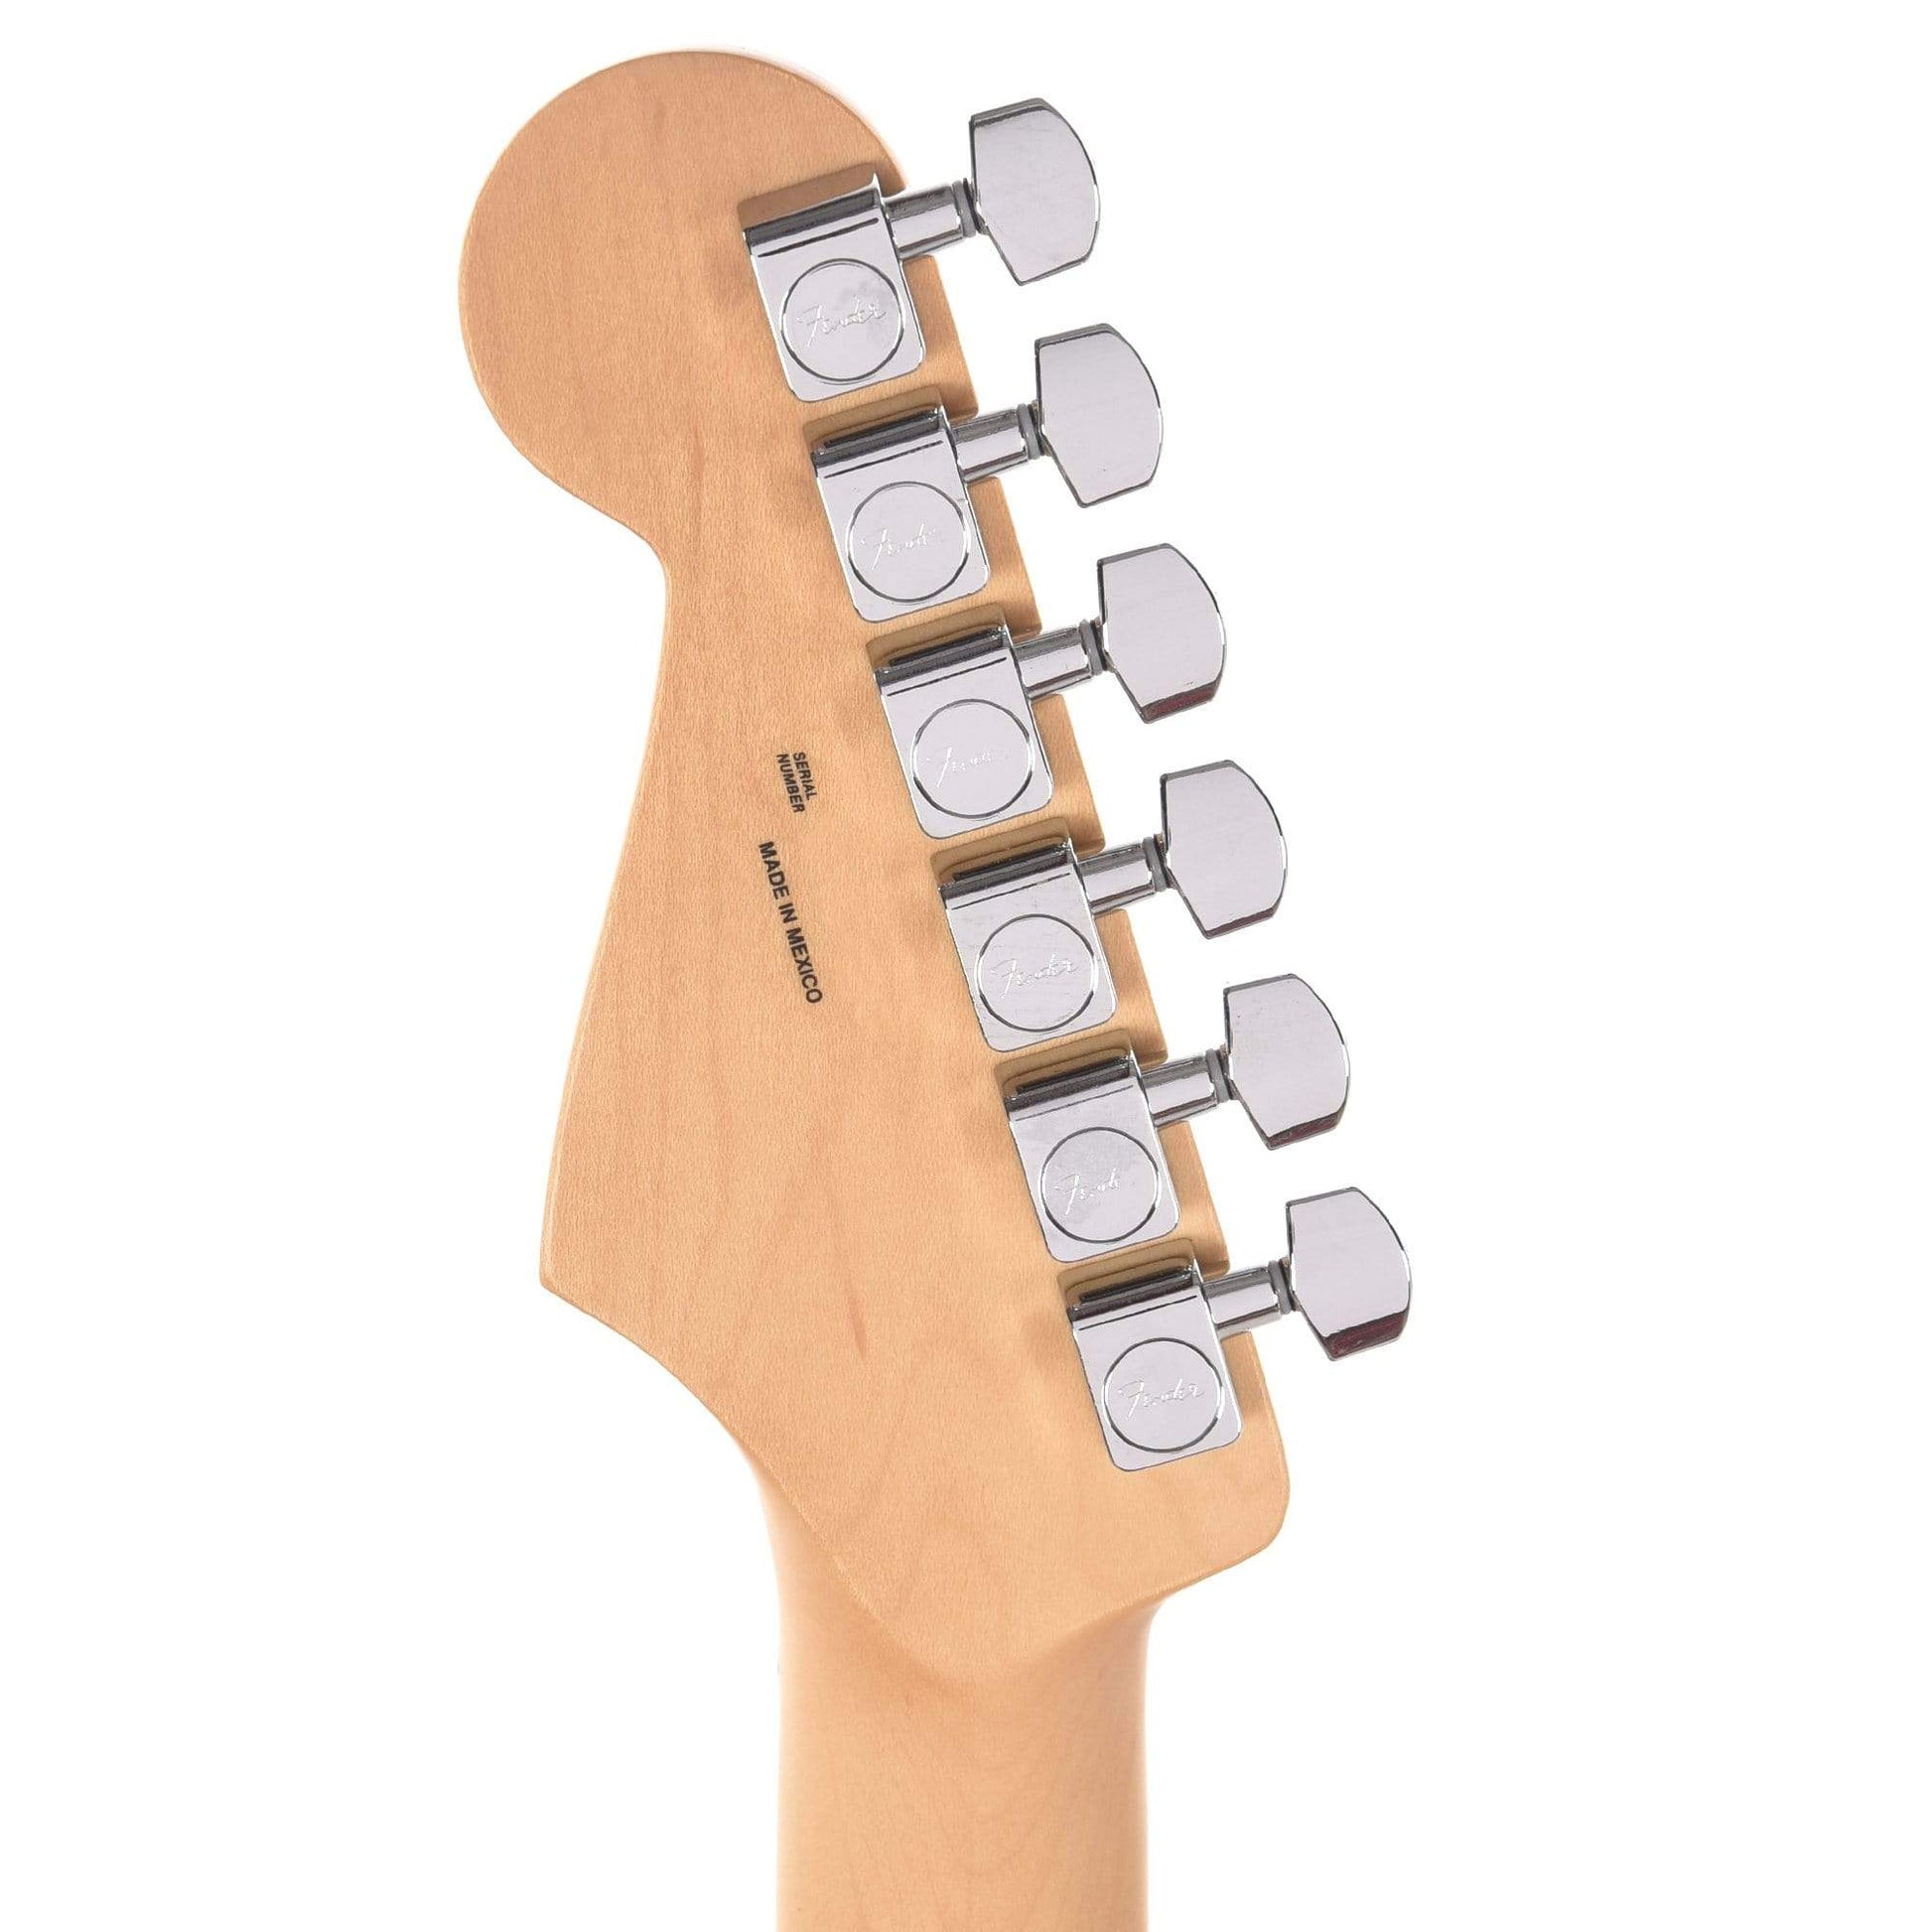 Fender Player Stratocaster Capri Orange Electric Guitars / Solid Body